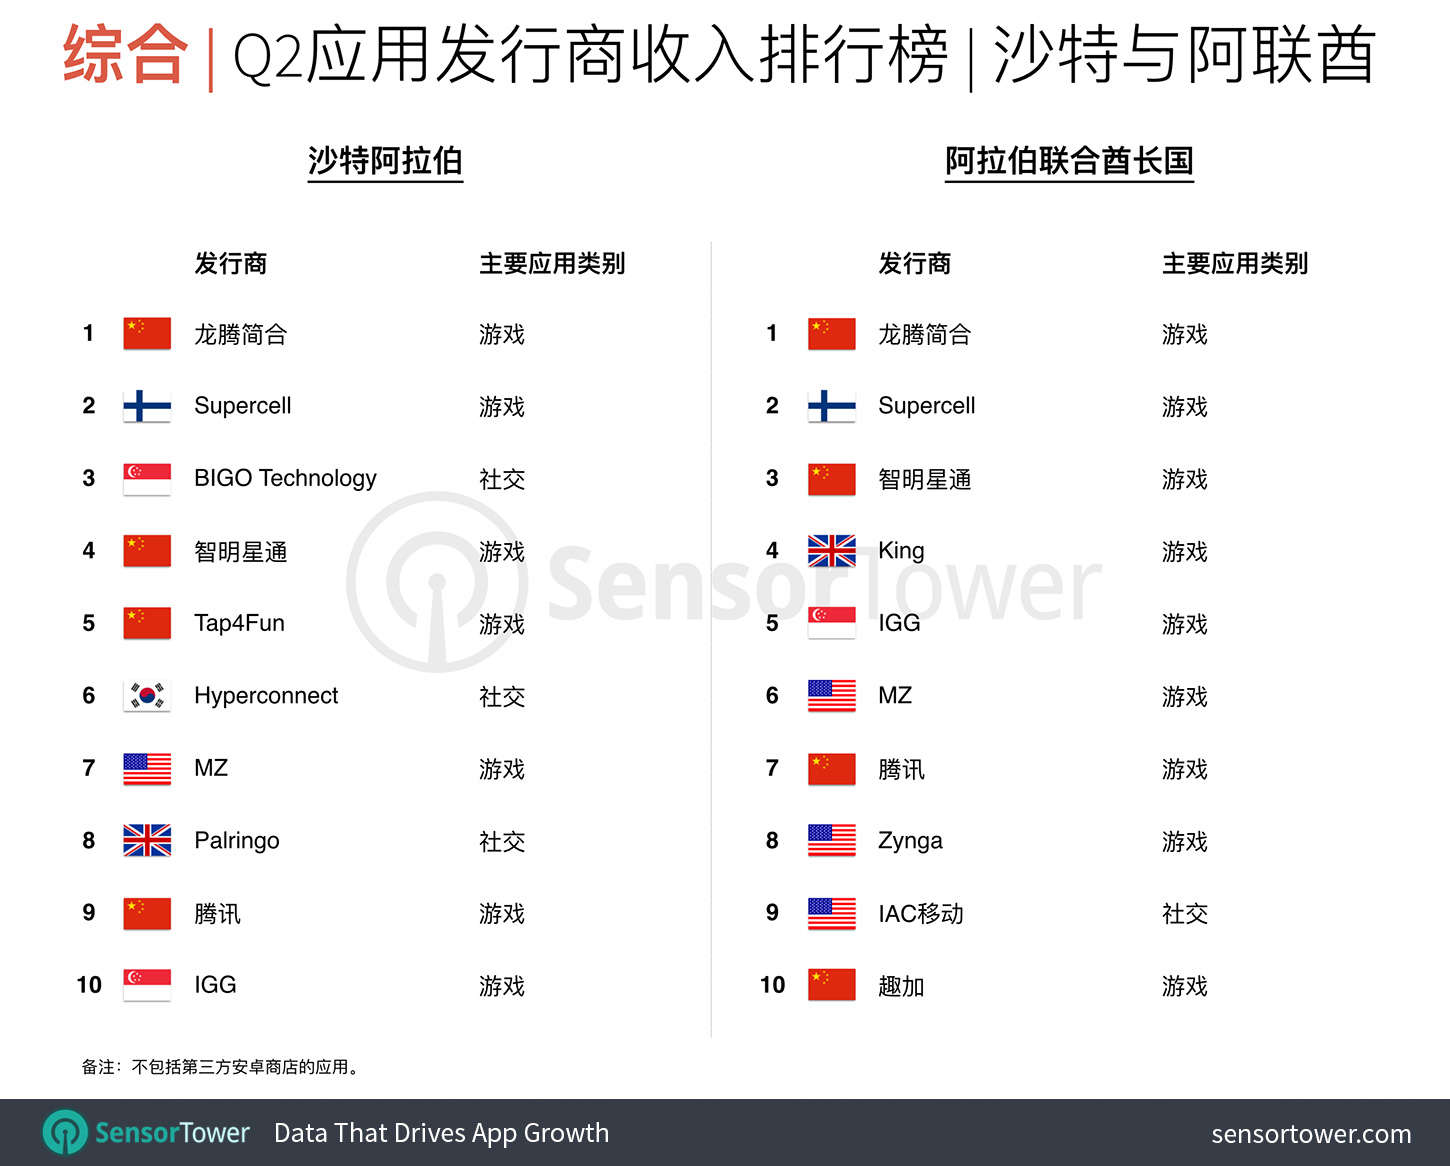 Q2 top Chinese publishers in Saudi Arabia and the UAE